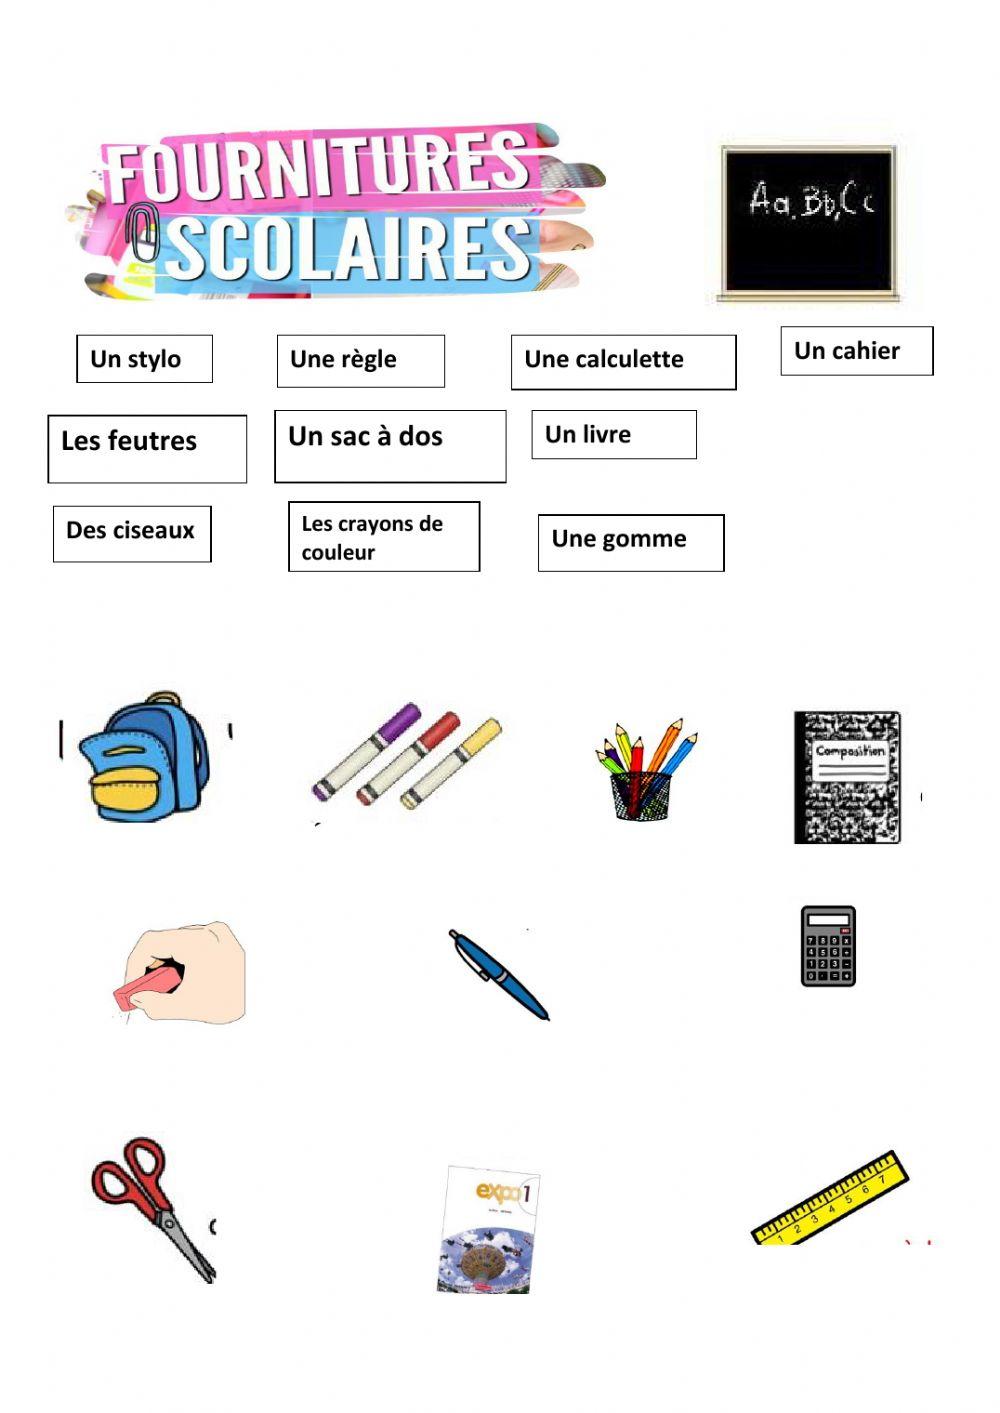 Preschool Français: les fournitures scolaires semaine 4 